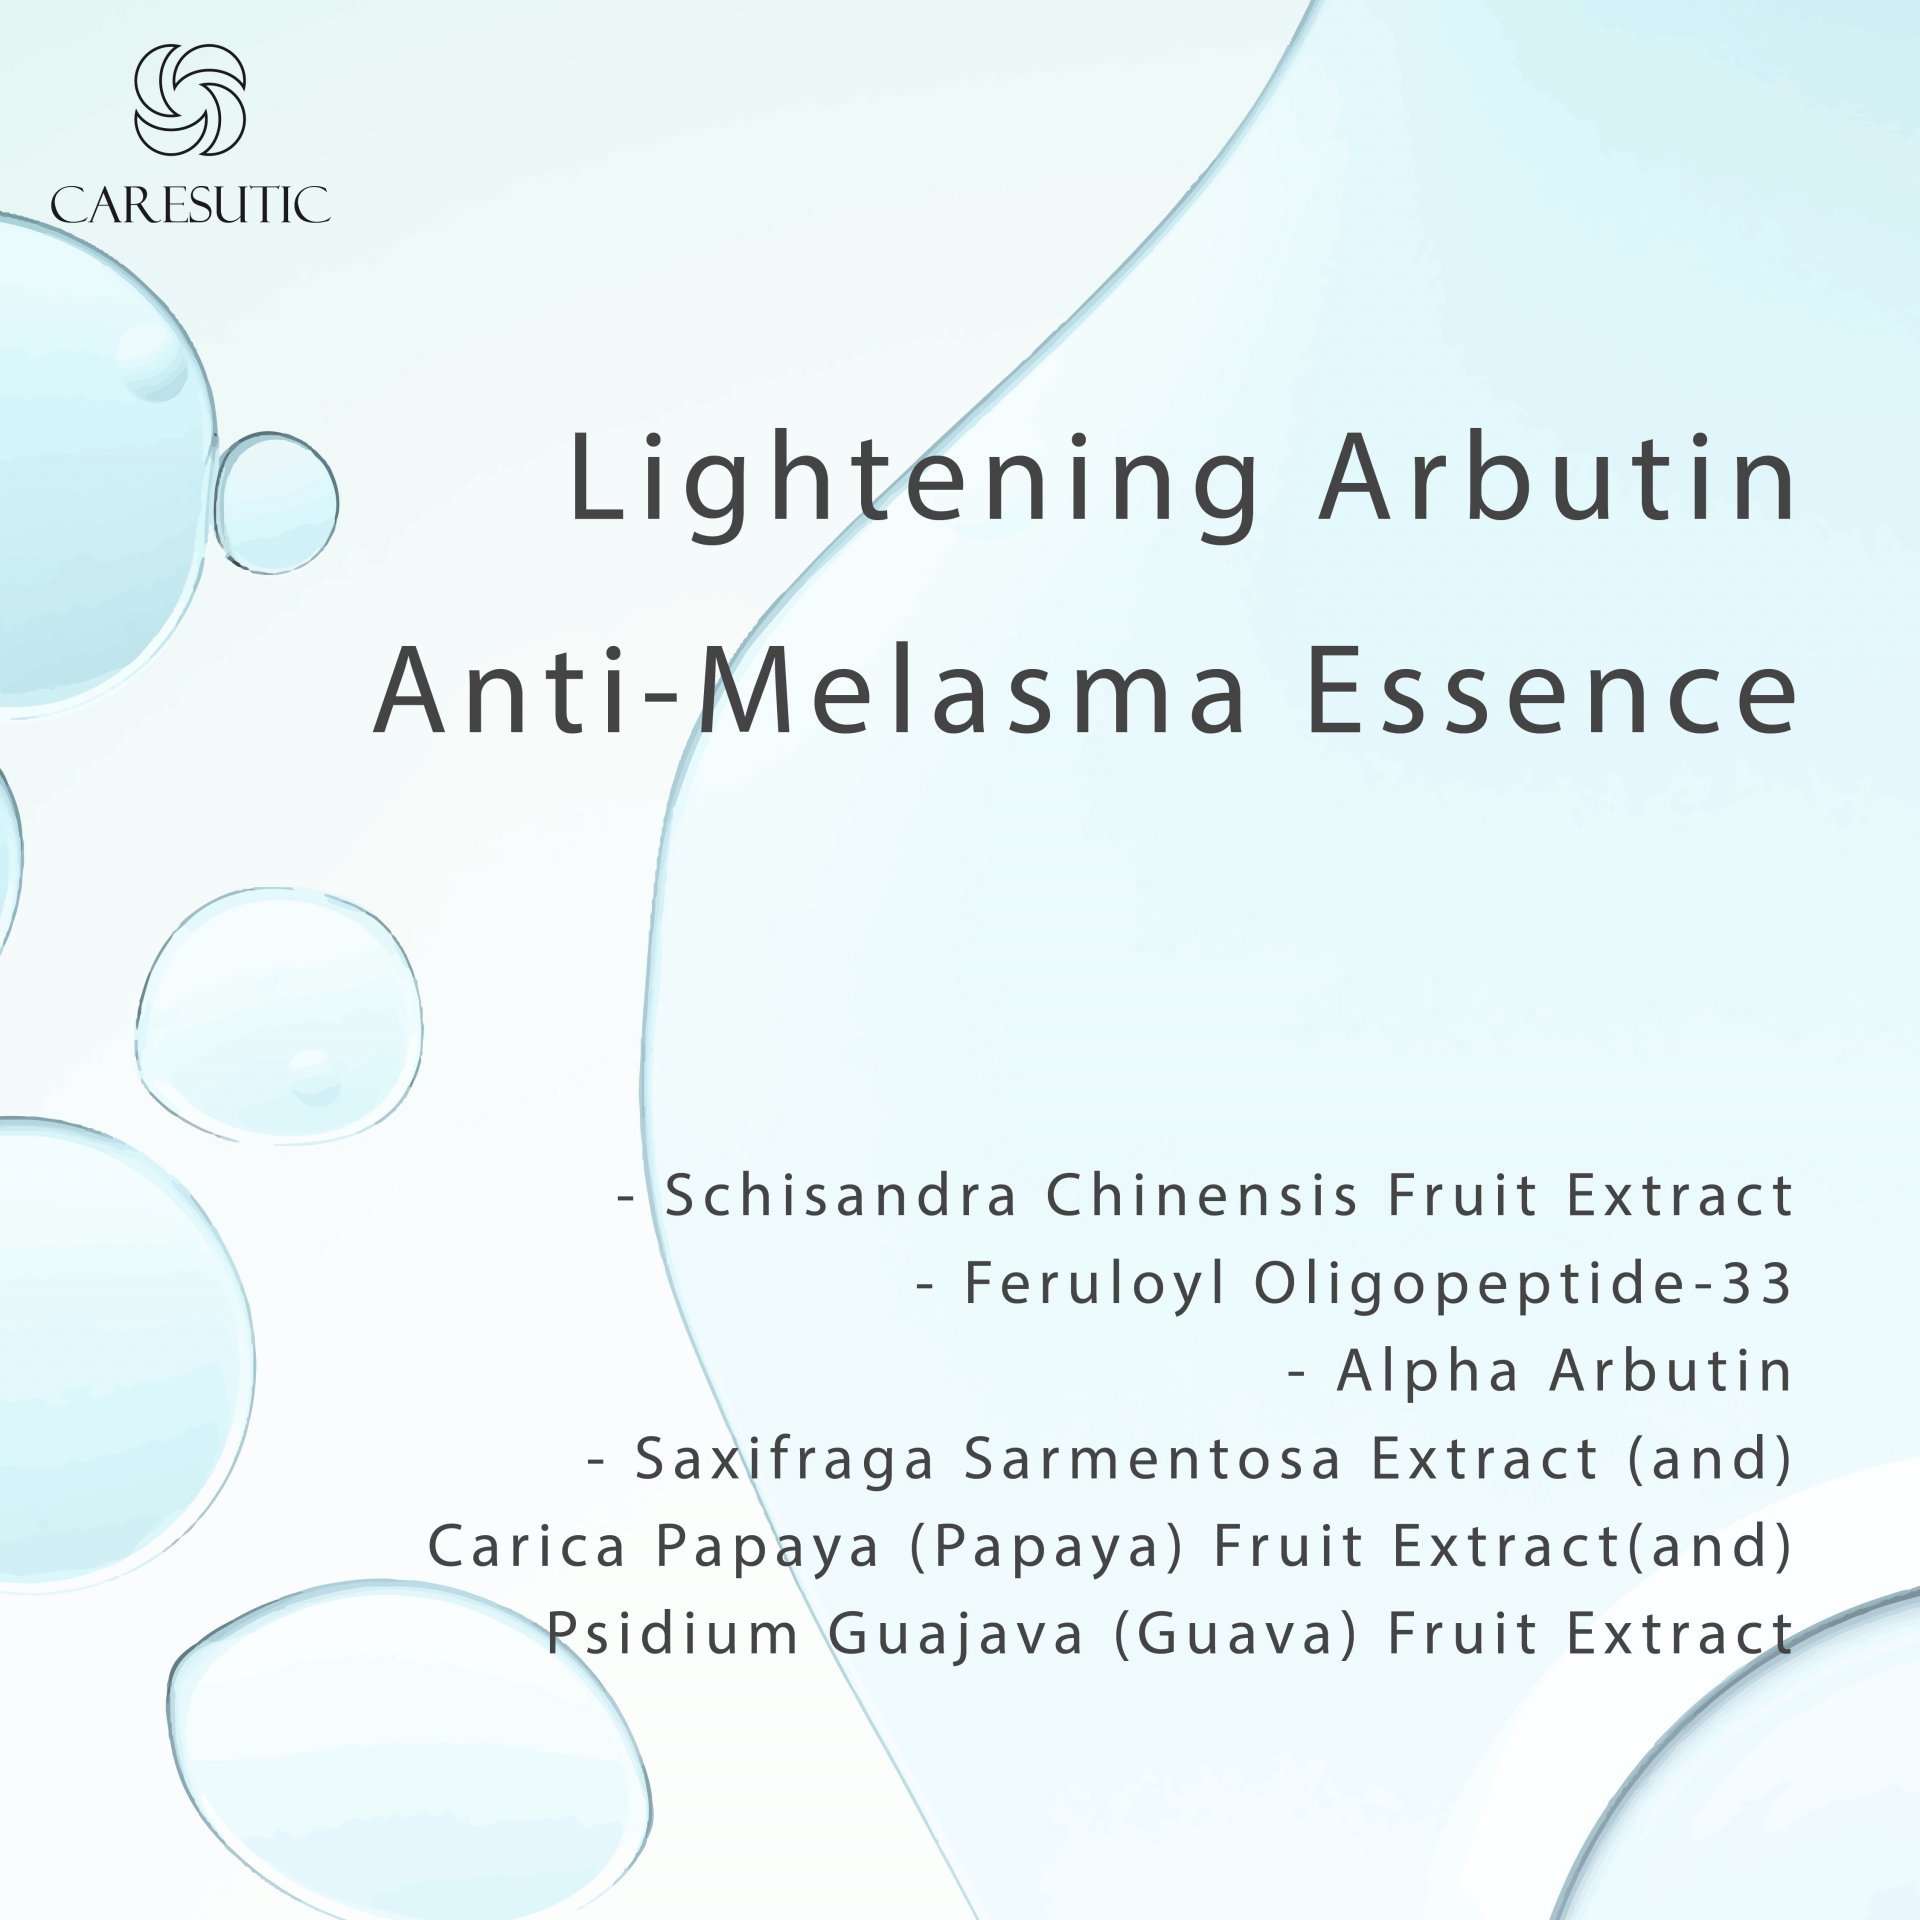 Lightening Arbutin Anti-Melasma Essence